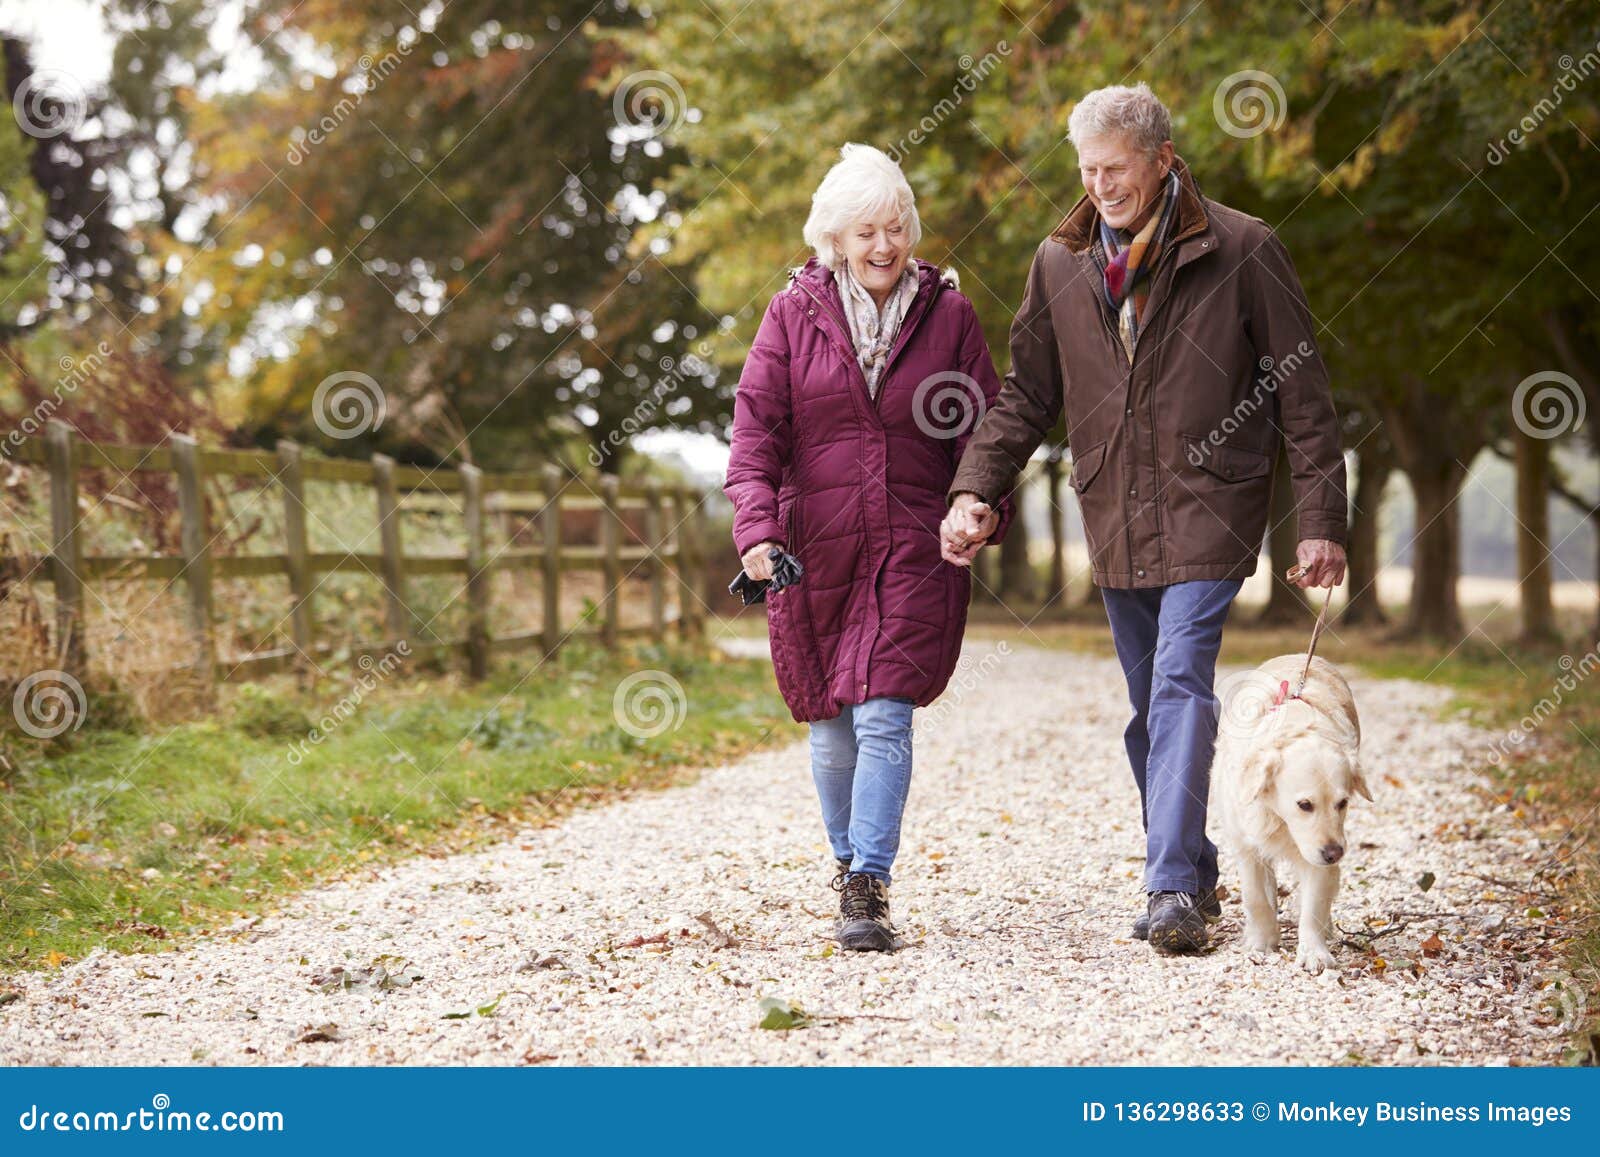 active senior couple on autumn walk with dog on path through countryside